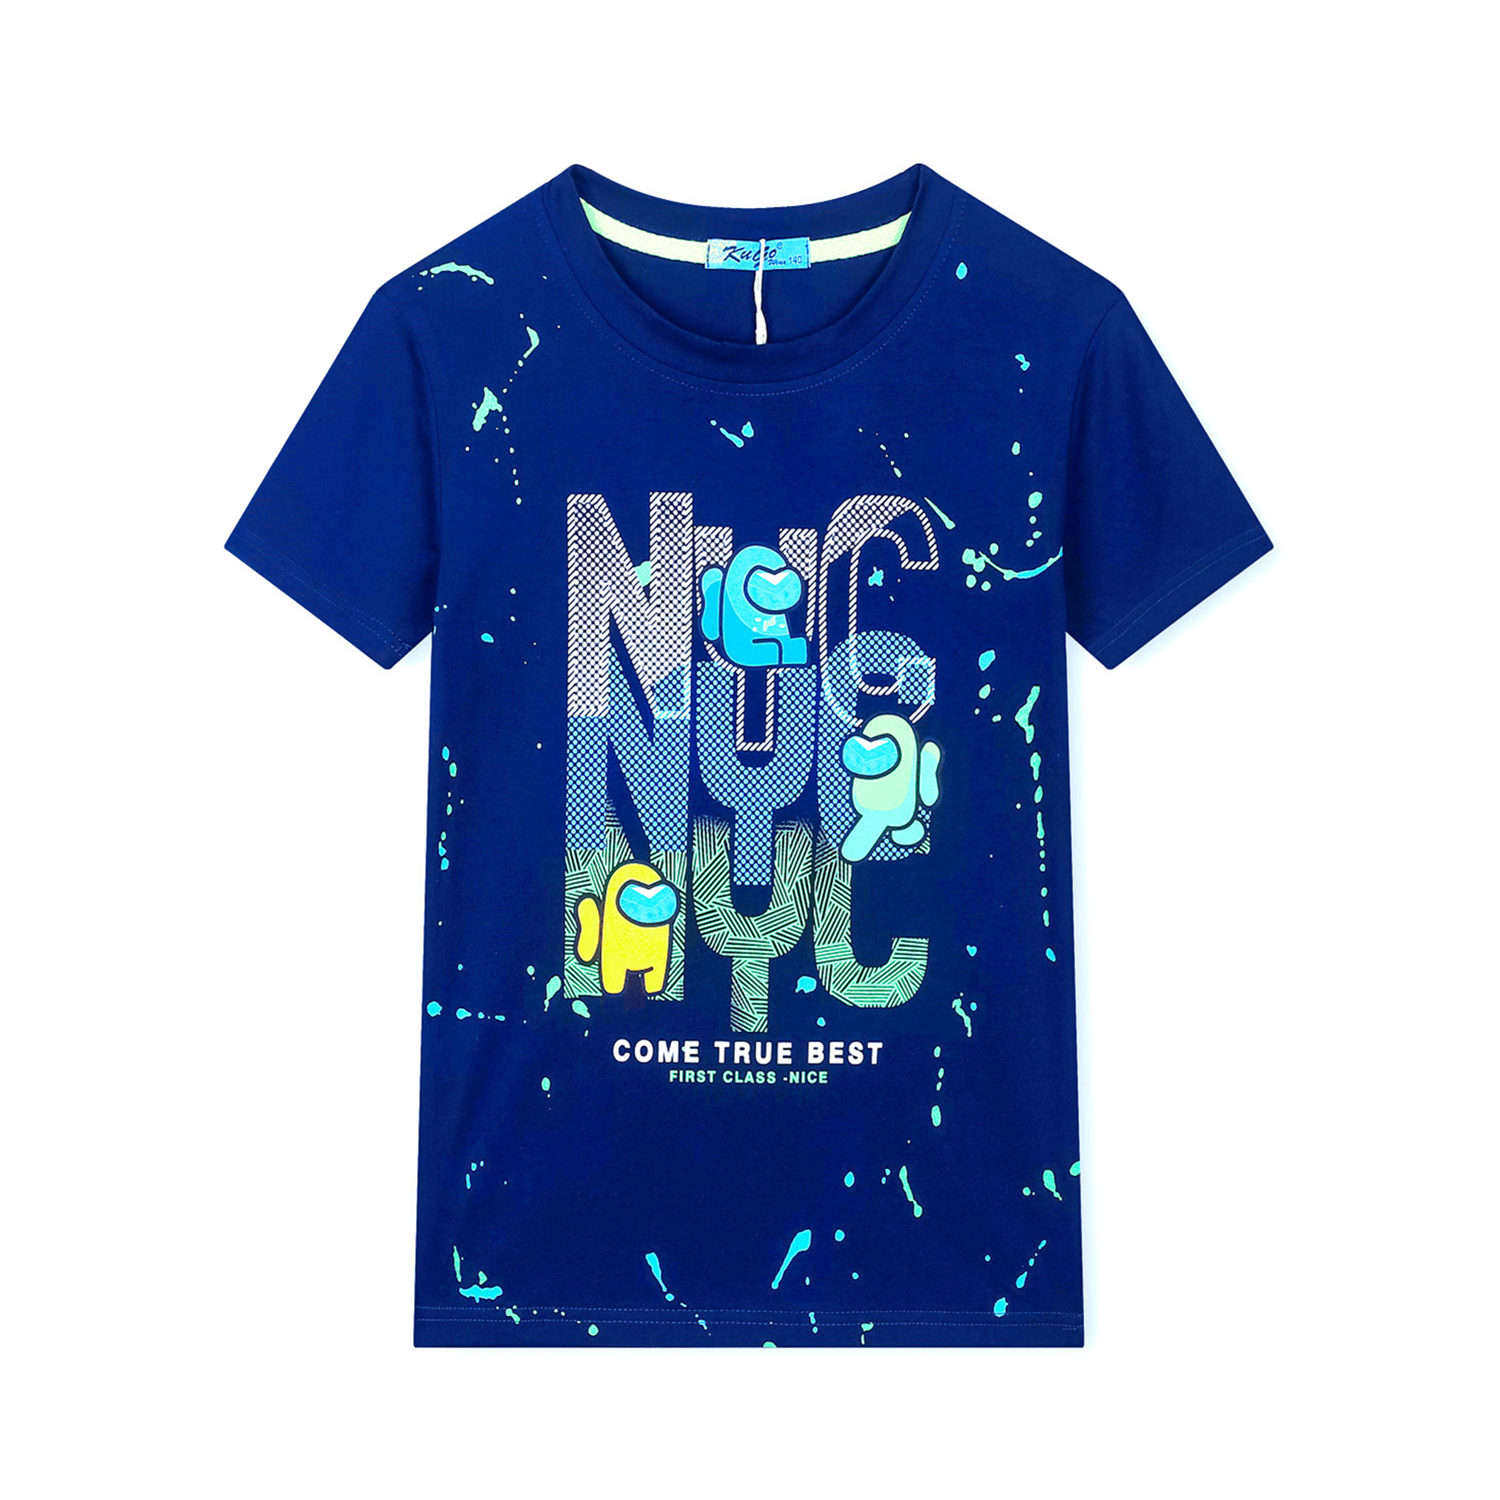 Chlapecké tričko - KUGO HC0706, modrá Barva: Modrá, Velikost: 146